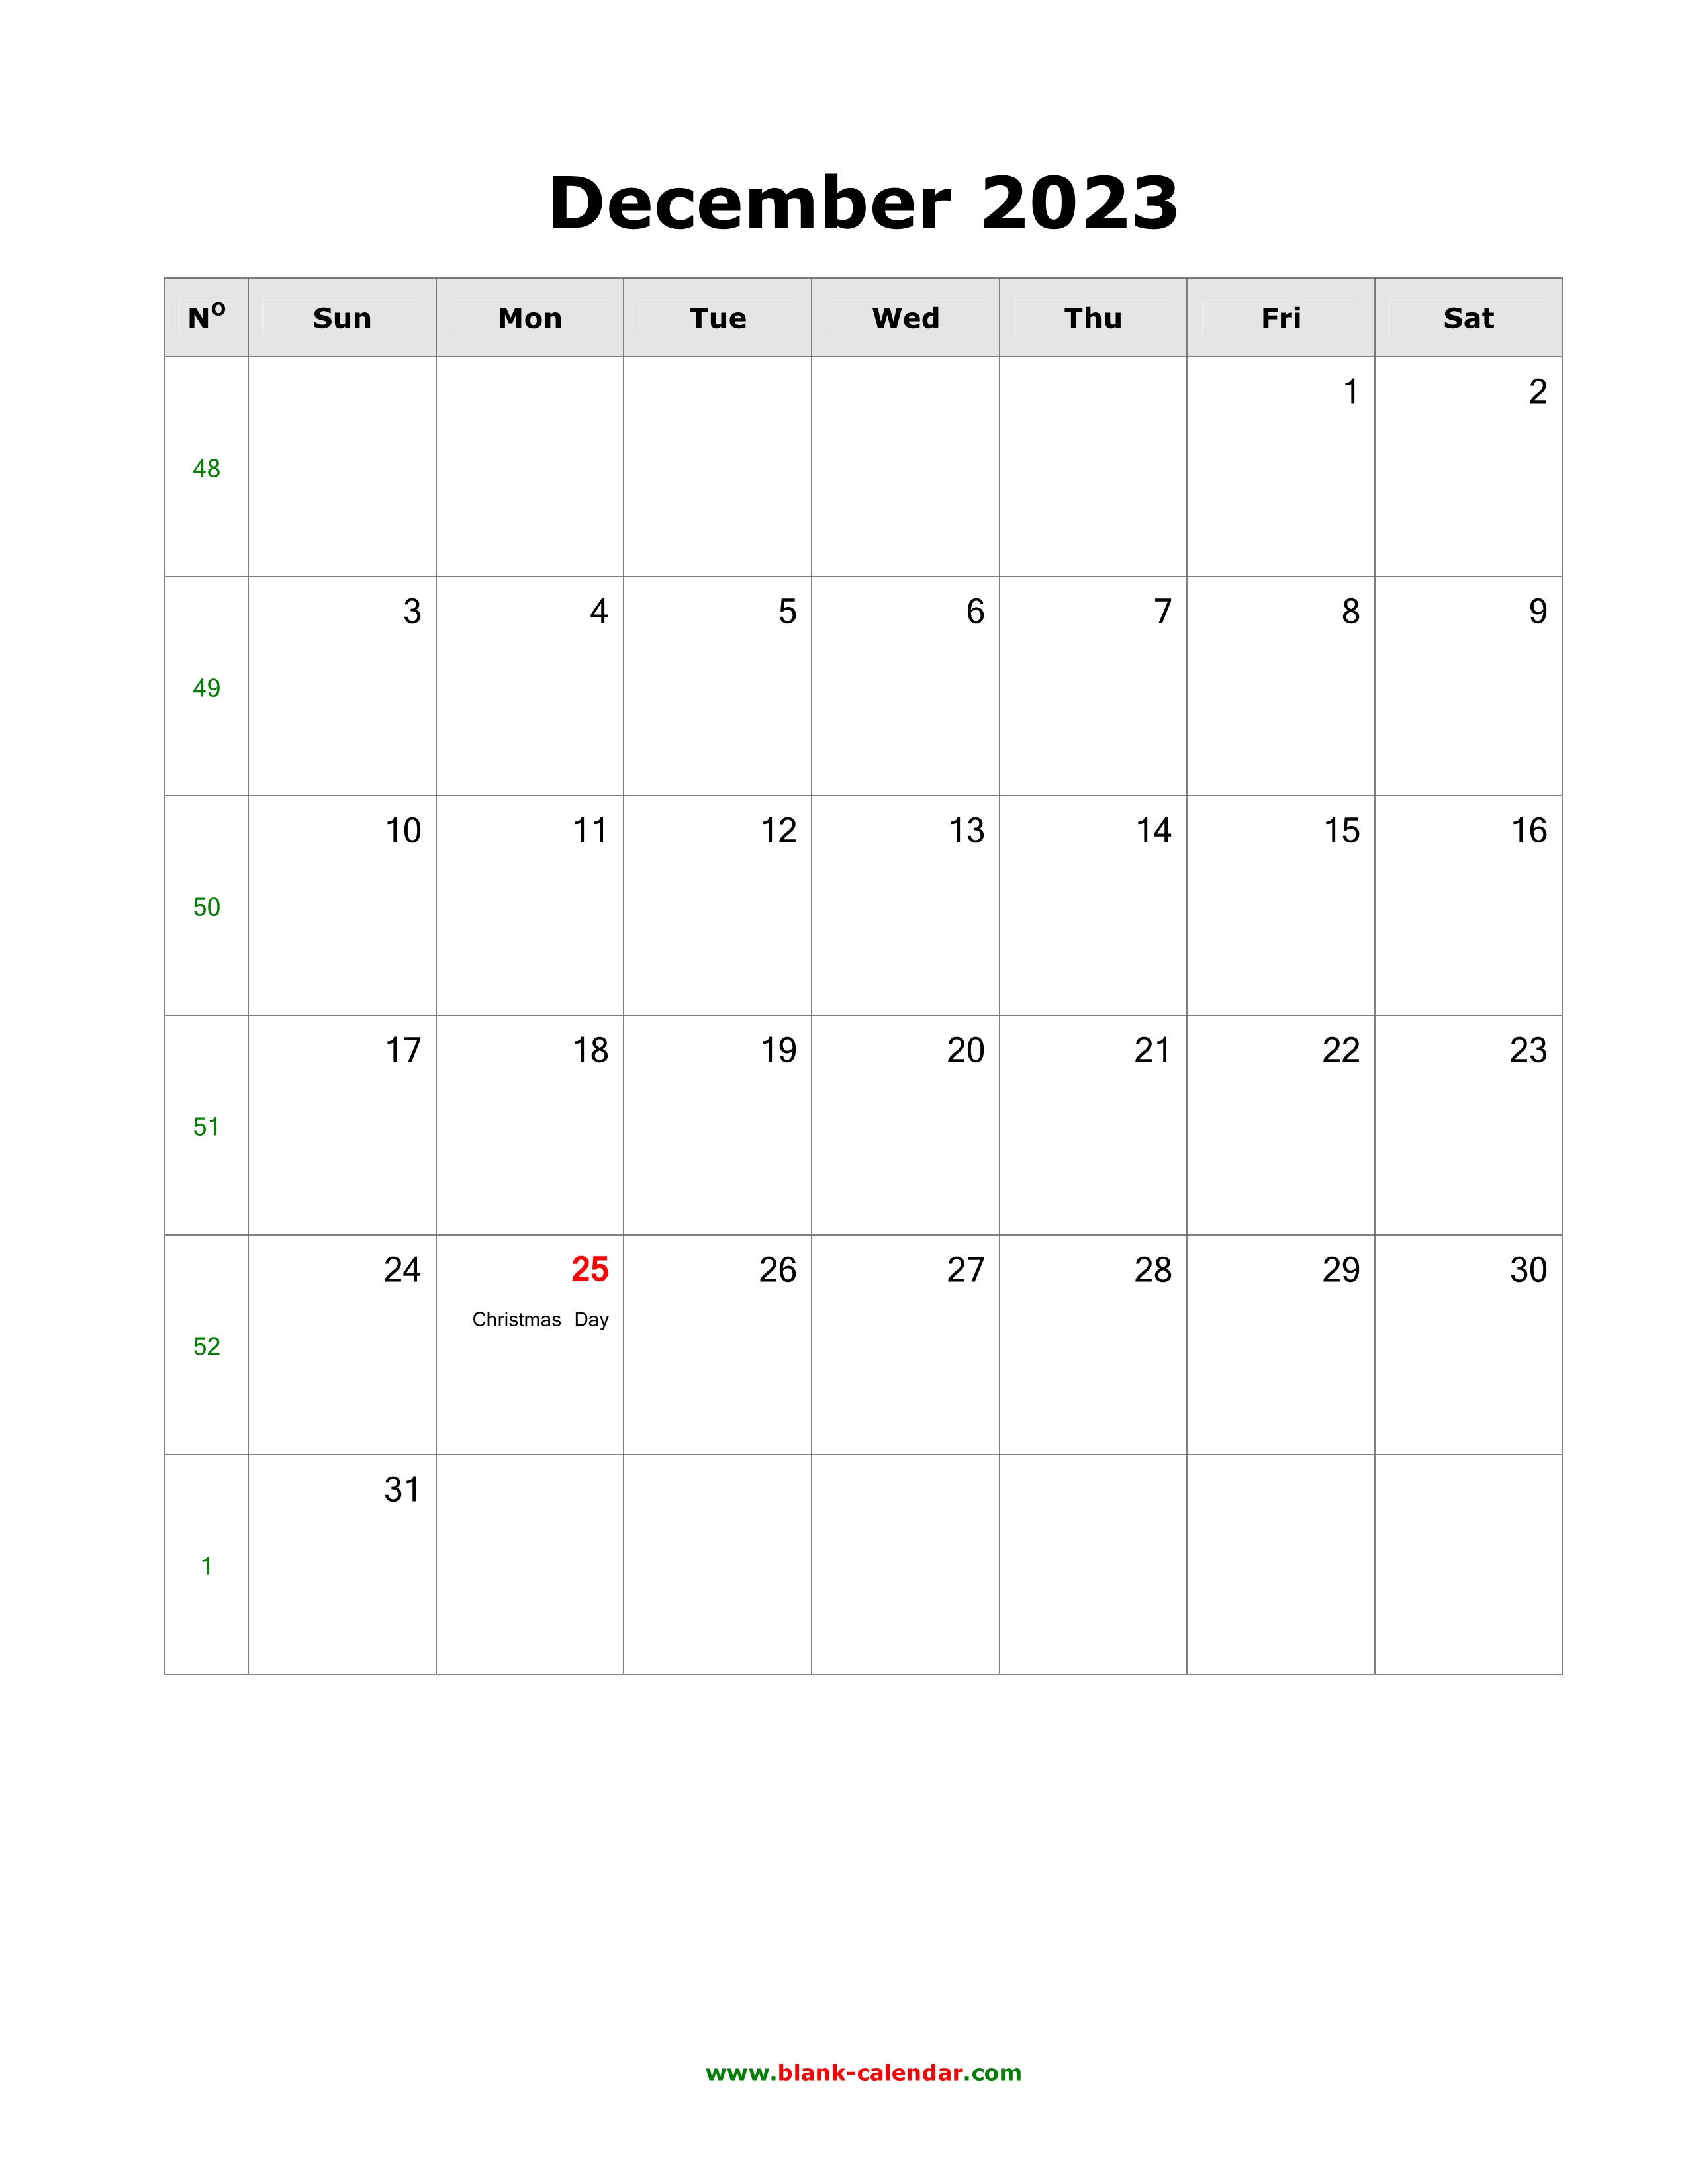 download-december-2023-blank-calendar-with-us-holidays-vertical